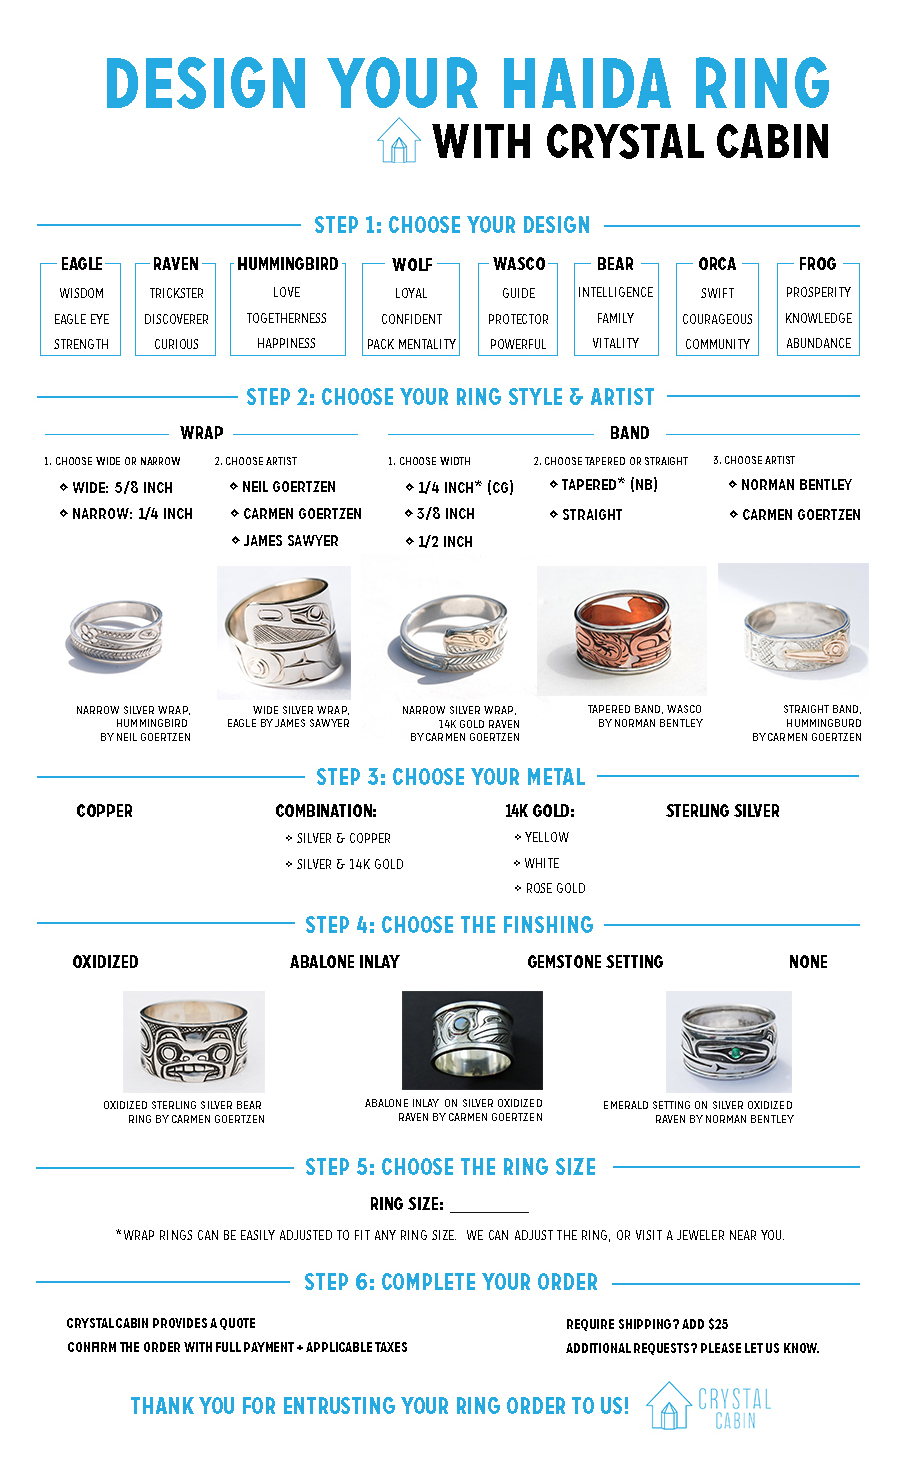 Design your haida ring